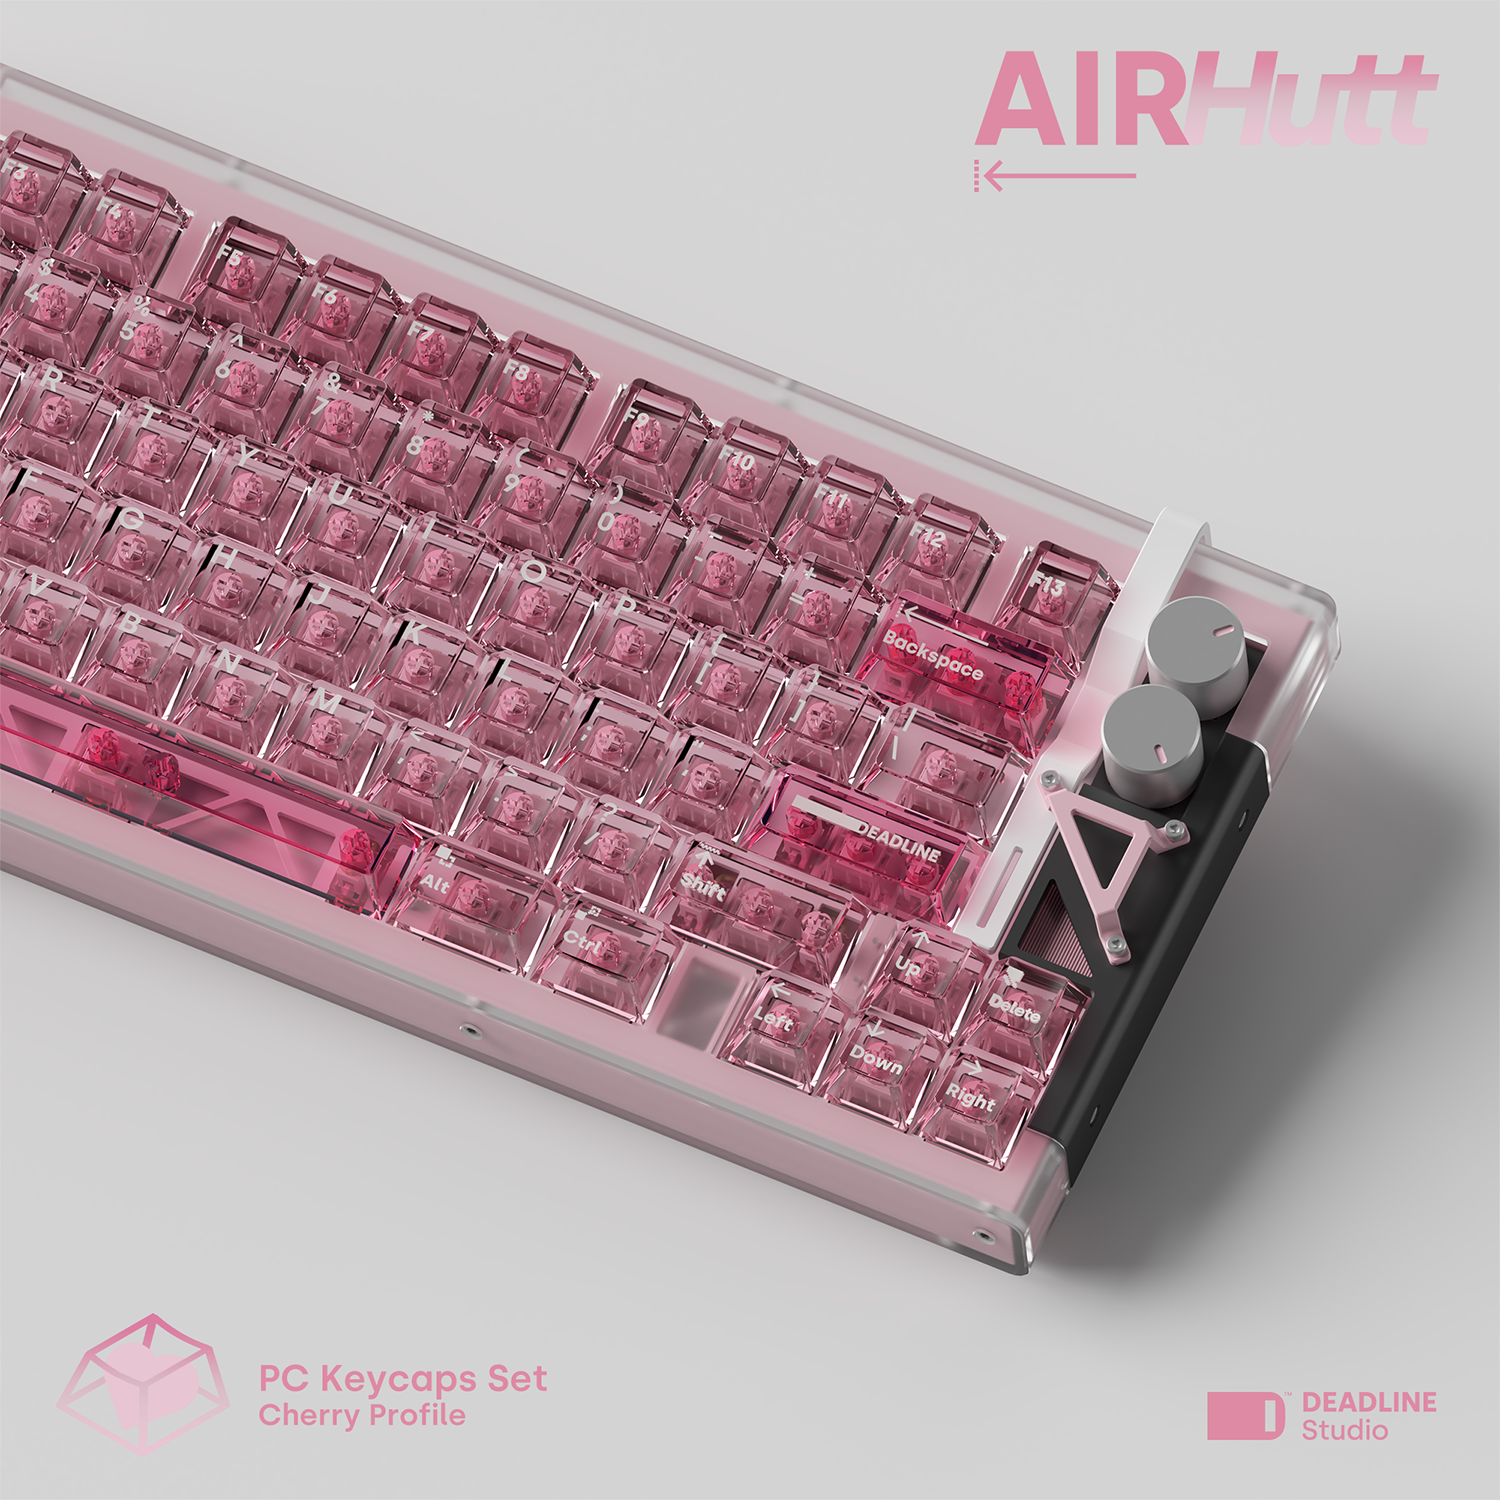 AIR-HUTT Keycaps